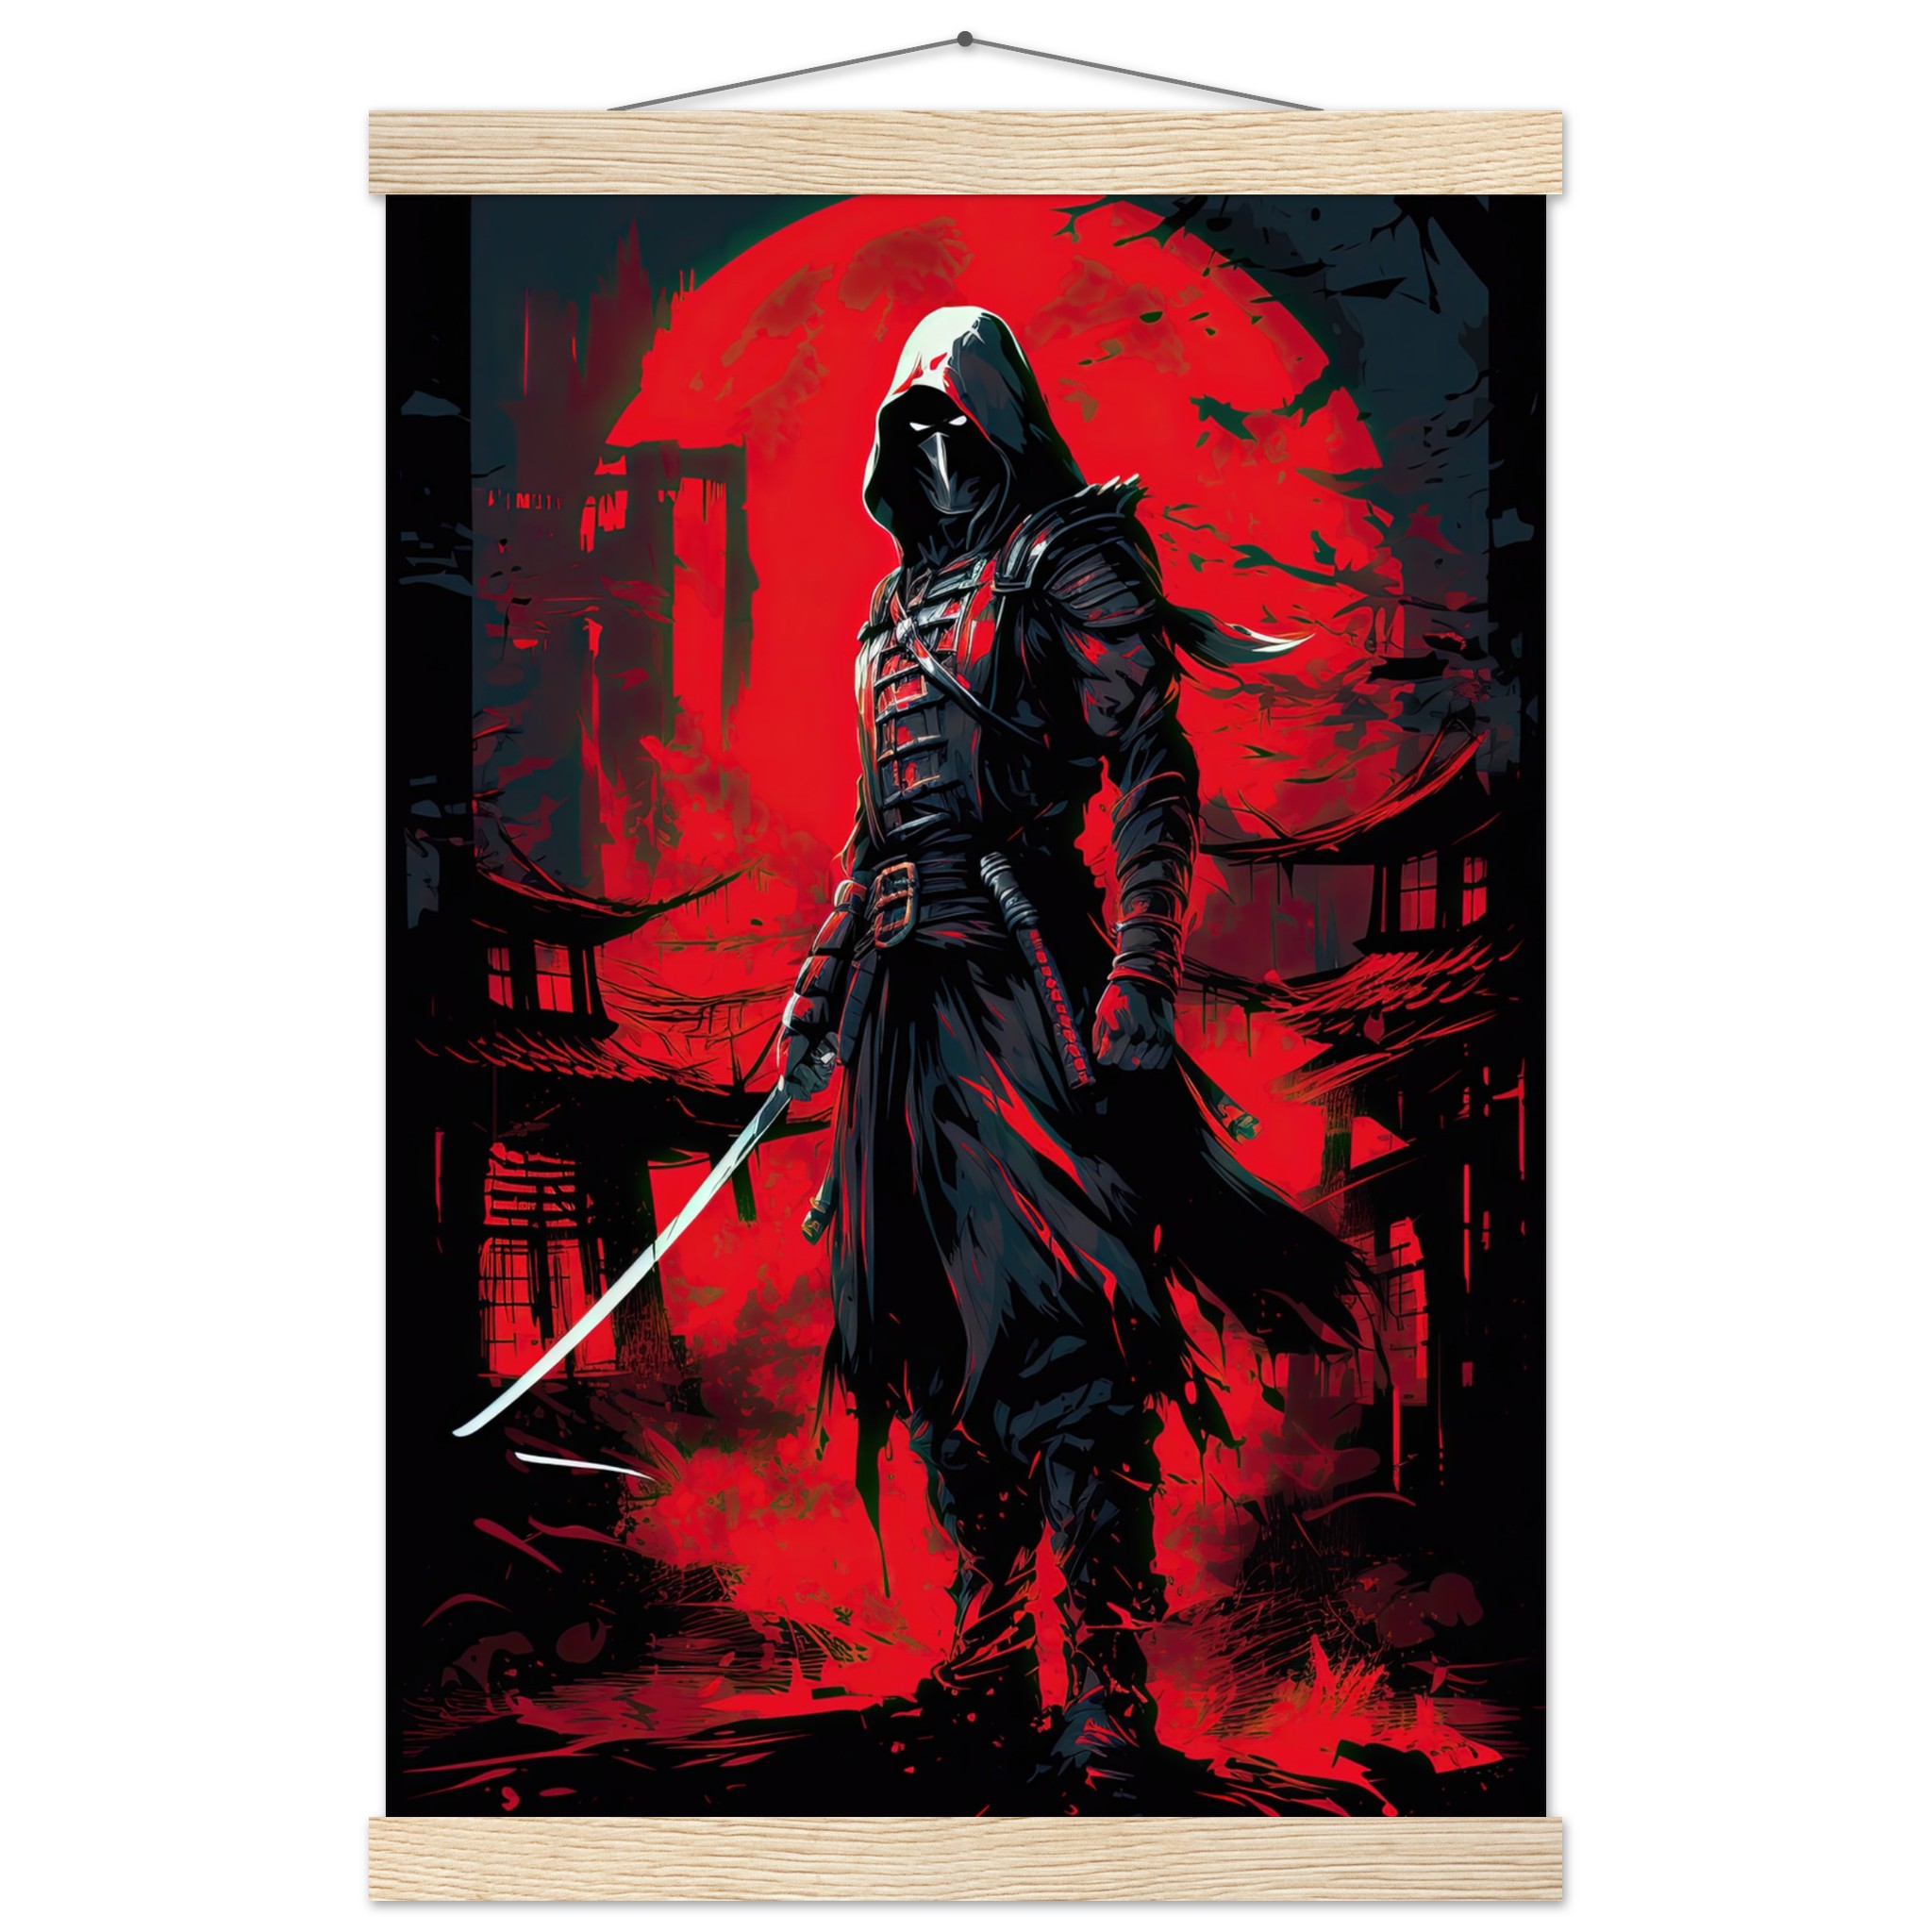 Stealthy Ninja Assassin Hanging Print – 30×45 cm / 12×18″, Natural wood wall hanger